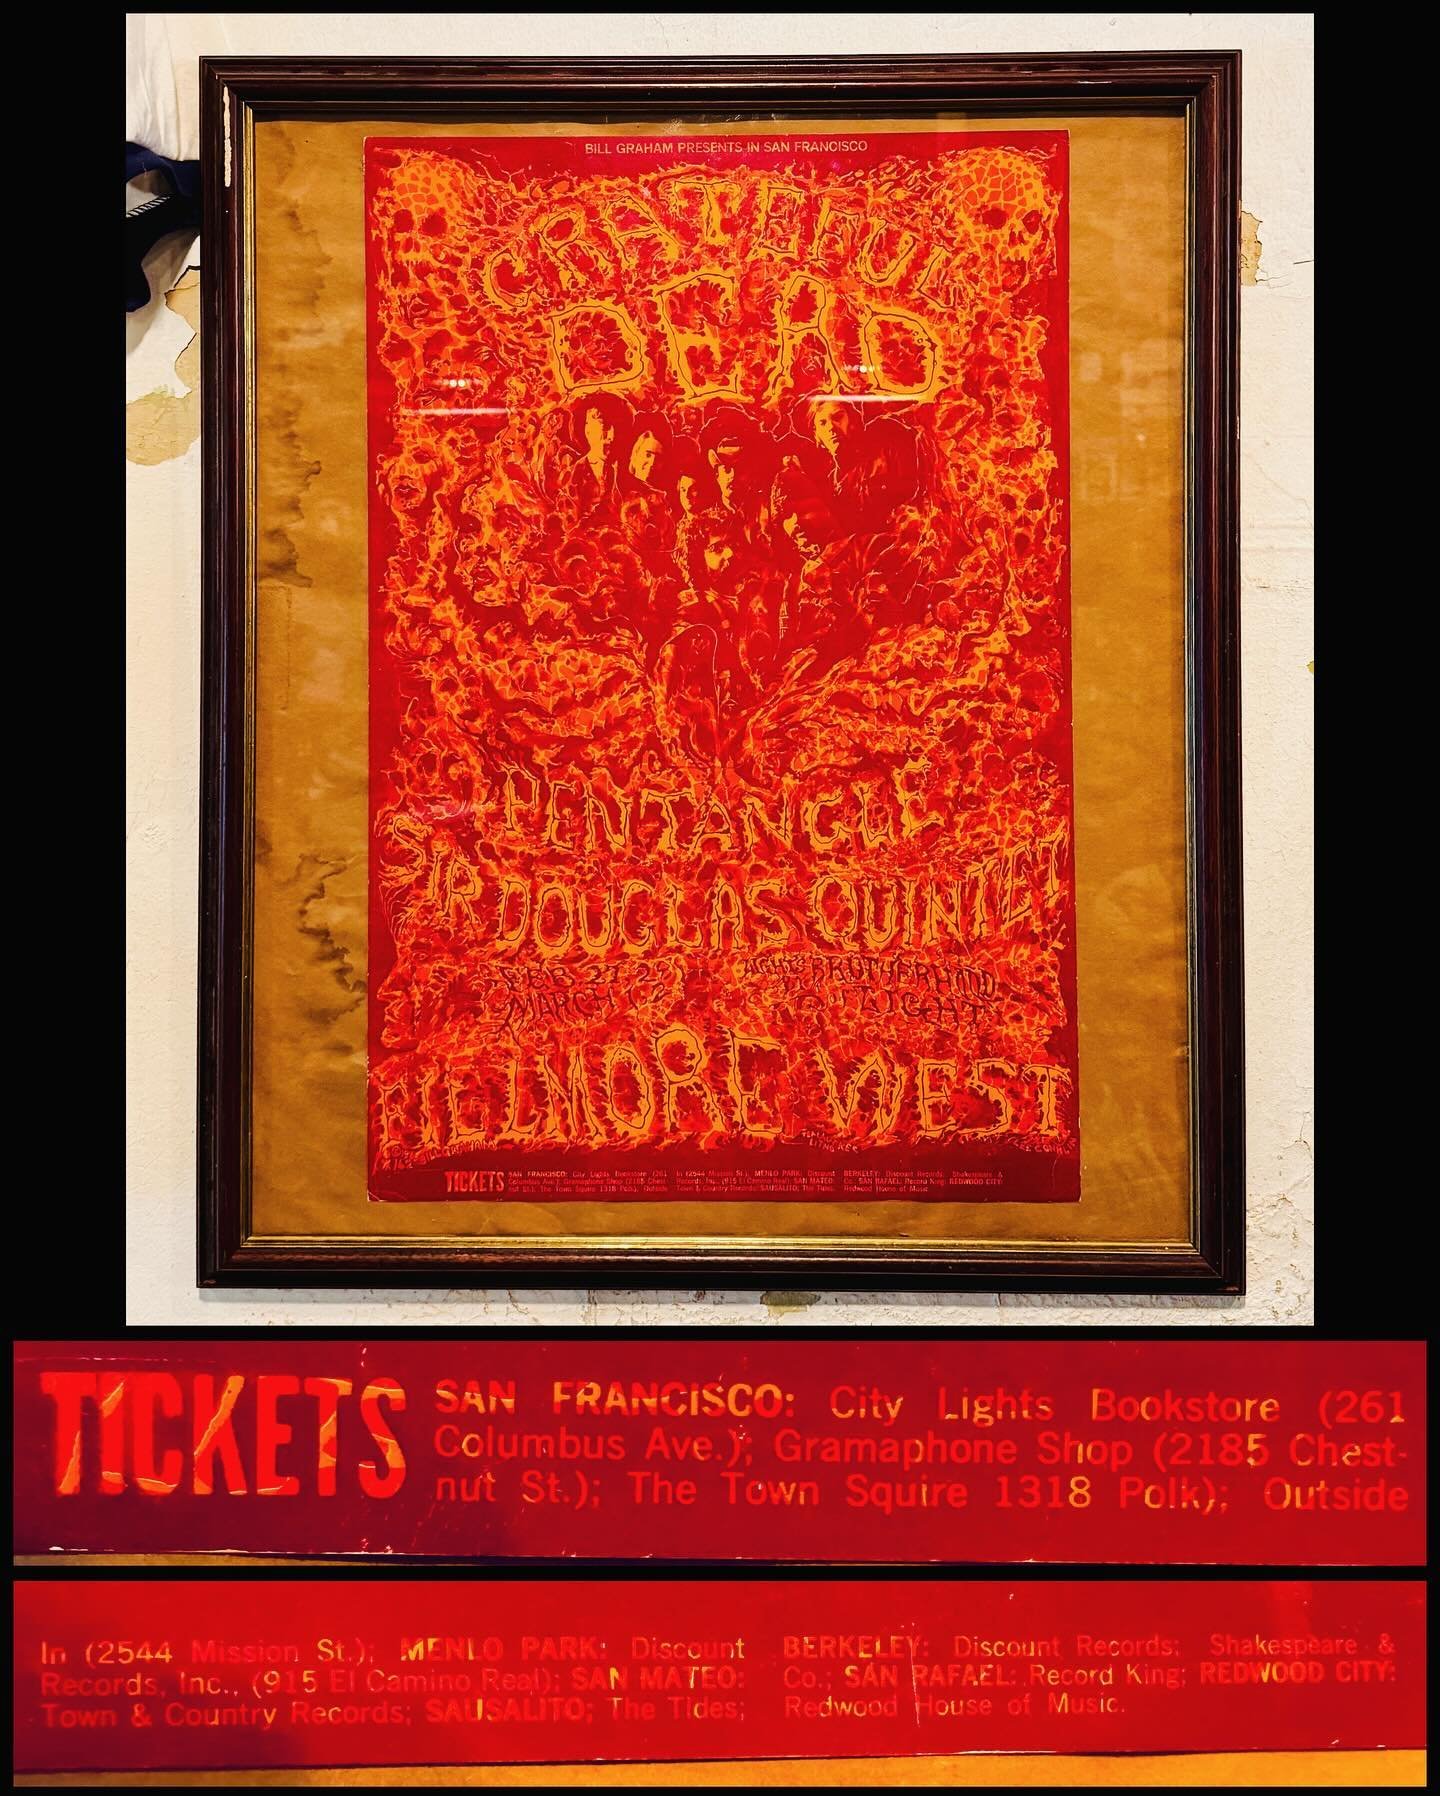 Original 1969 Grateful Dead at the Fillmore West poster! First printing as far as I can tell. Framed! $70
#gratefuldead #billgraham #fillmorewest #1969 #sirdouglasquintet #pentangle